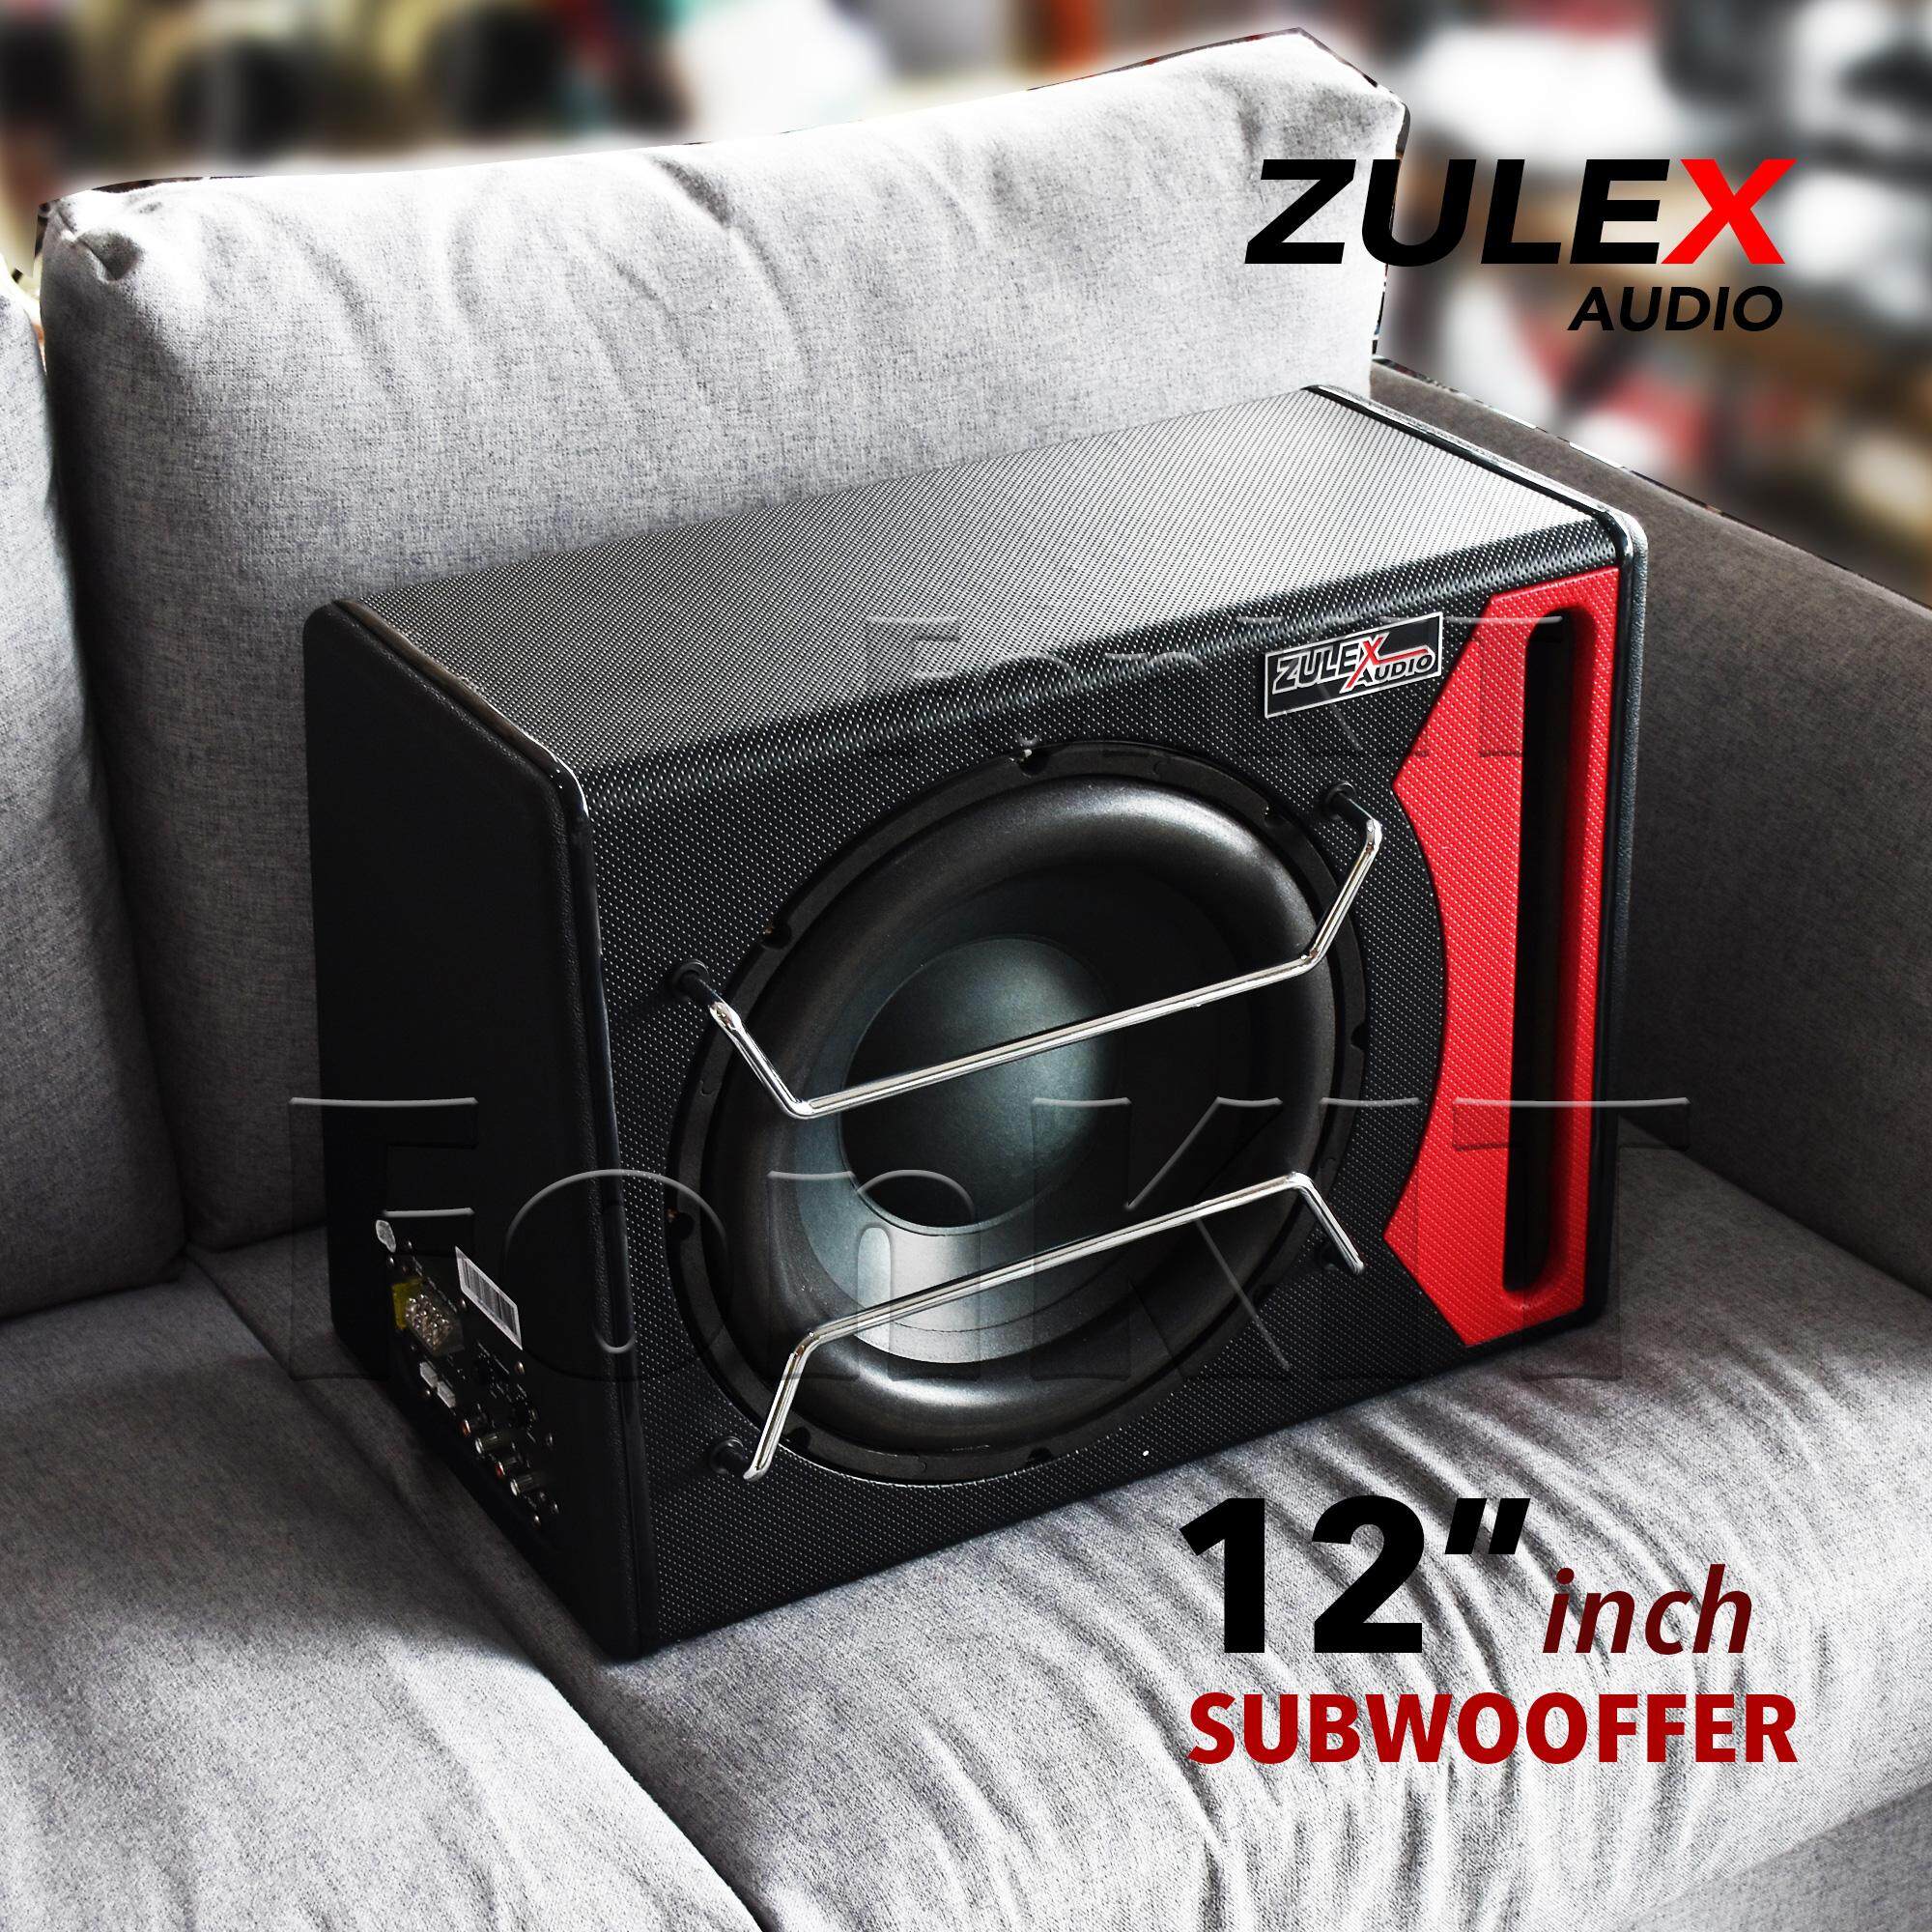 Zulex ตู้ลำโพงซับวูฟเฟอร์ 12 นิ้ว พร้อมแอมป์ ขยายในตัว Zulex ZB-128A กำลังขับ 800 วัตต์ (100w RMS) Zulex รุ่น ZB-128A